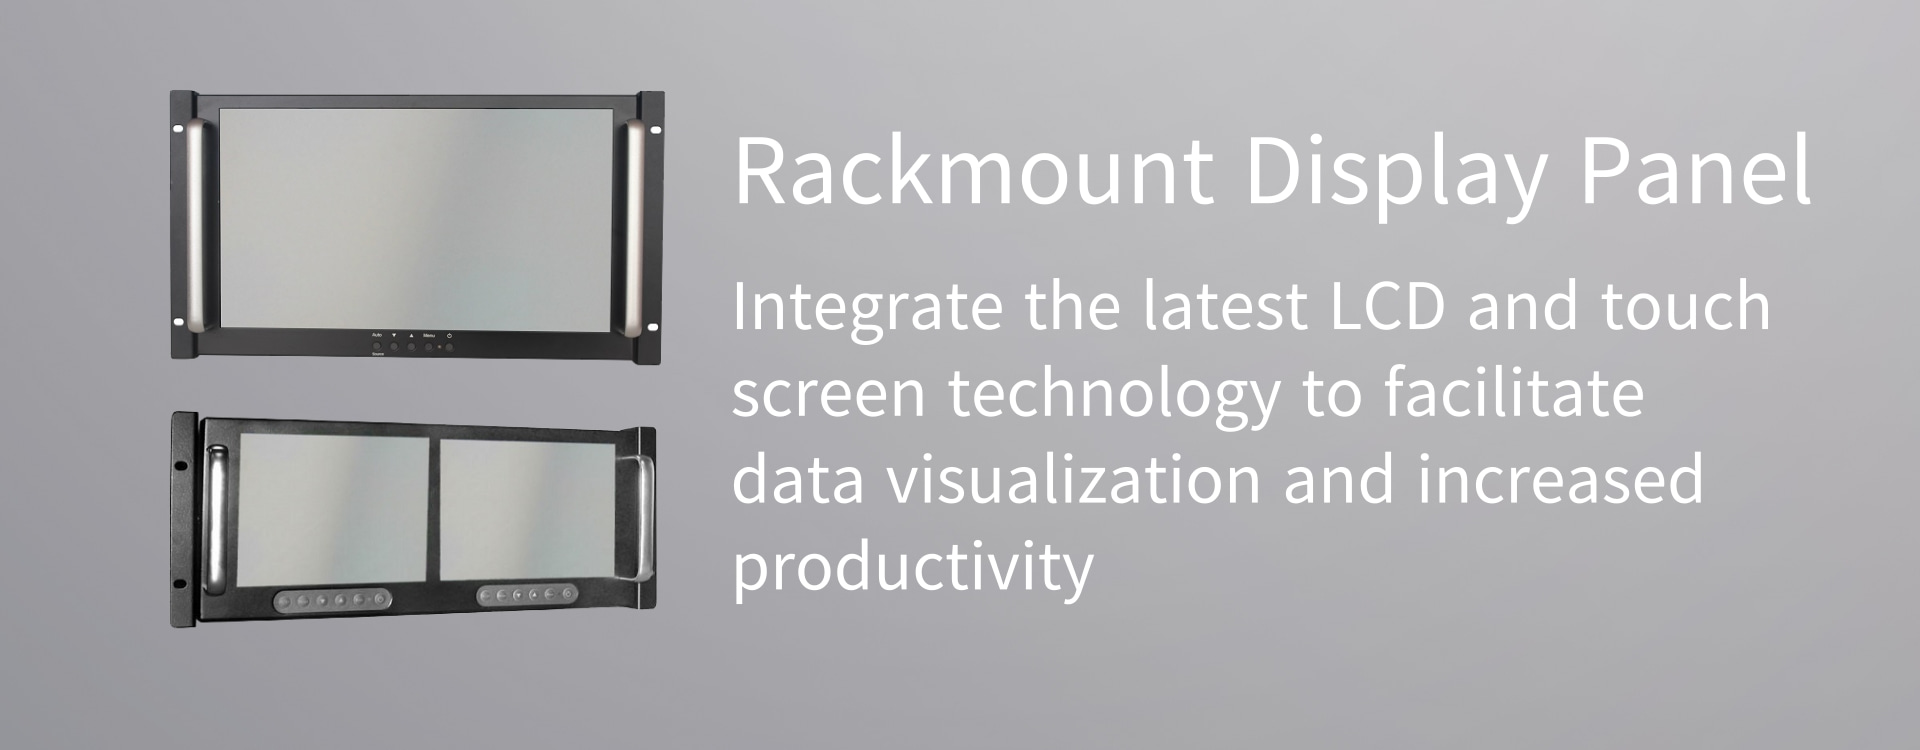 Rackmount Display Pannel